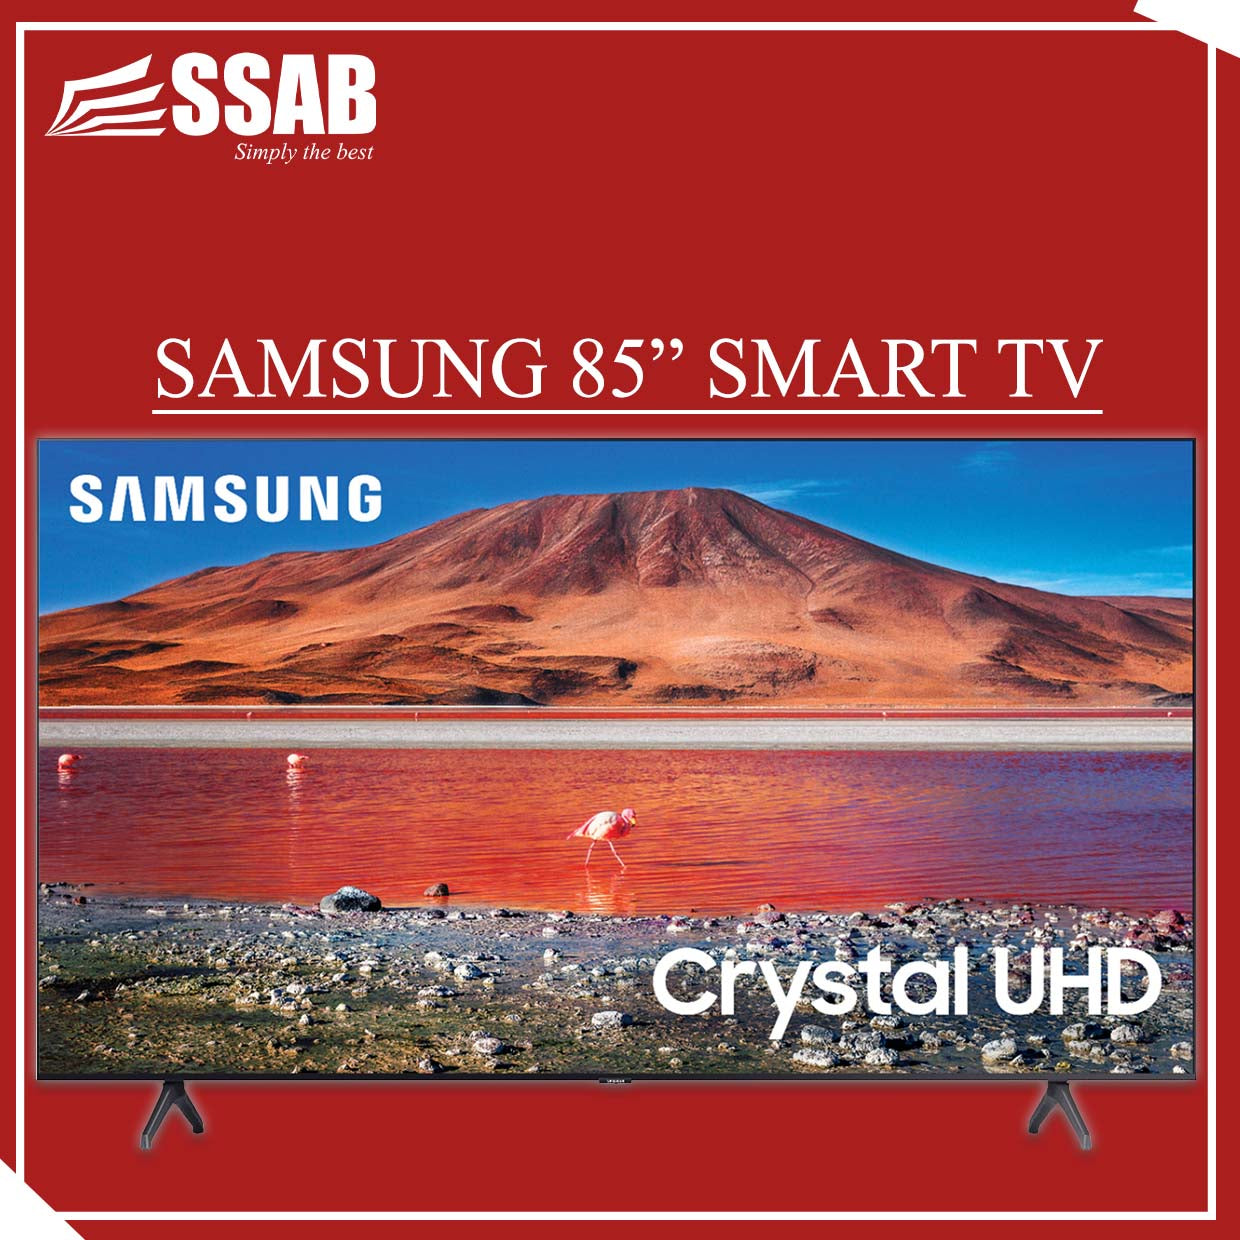 Samsung 85" Smart TV